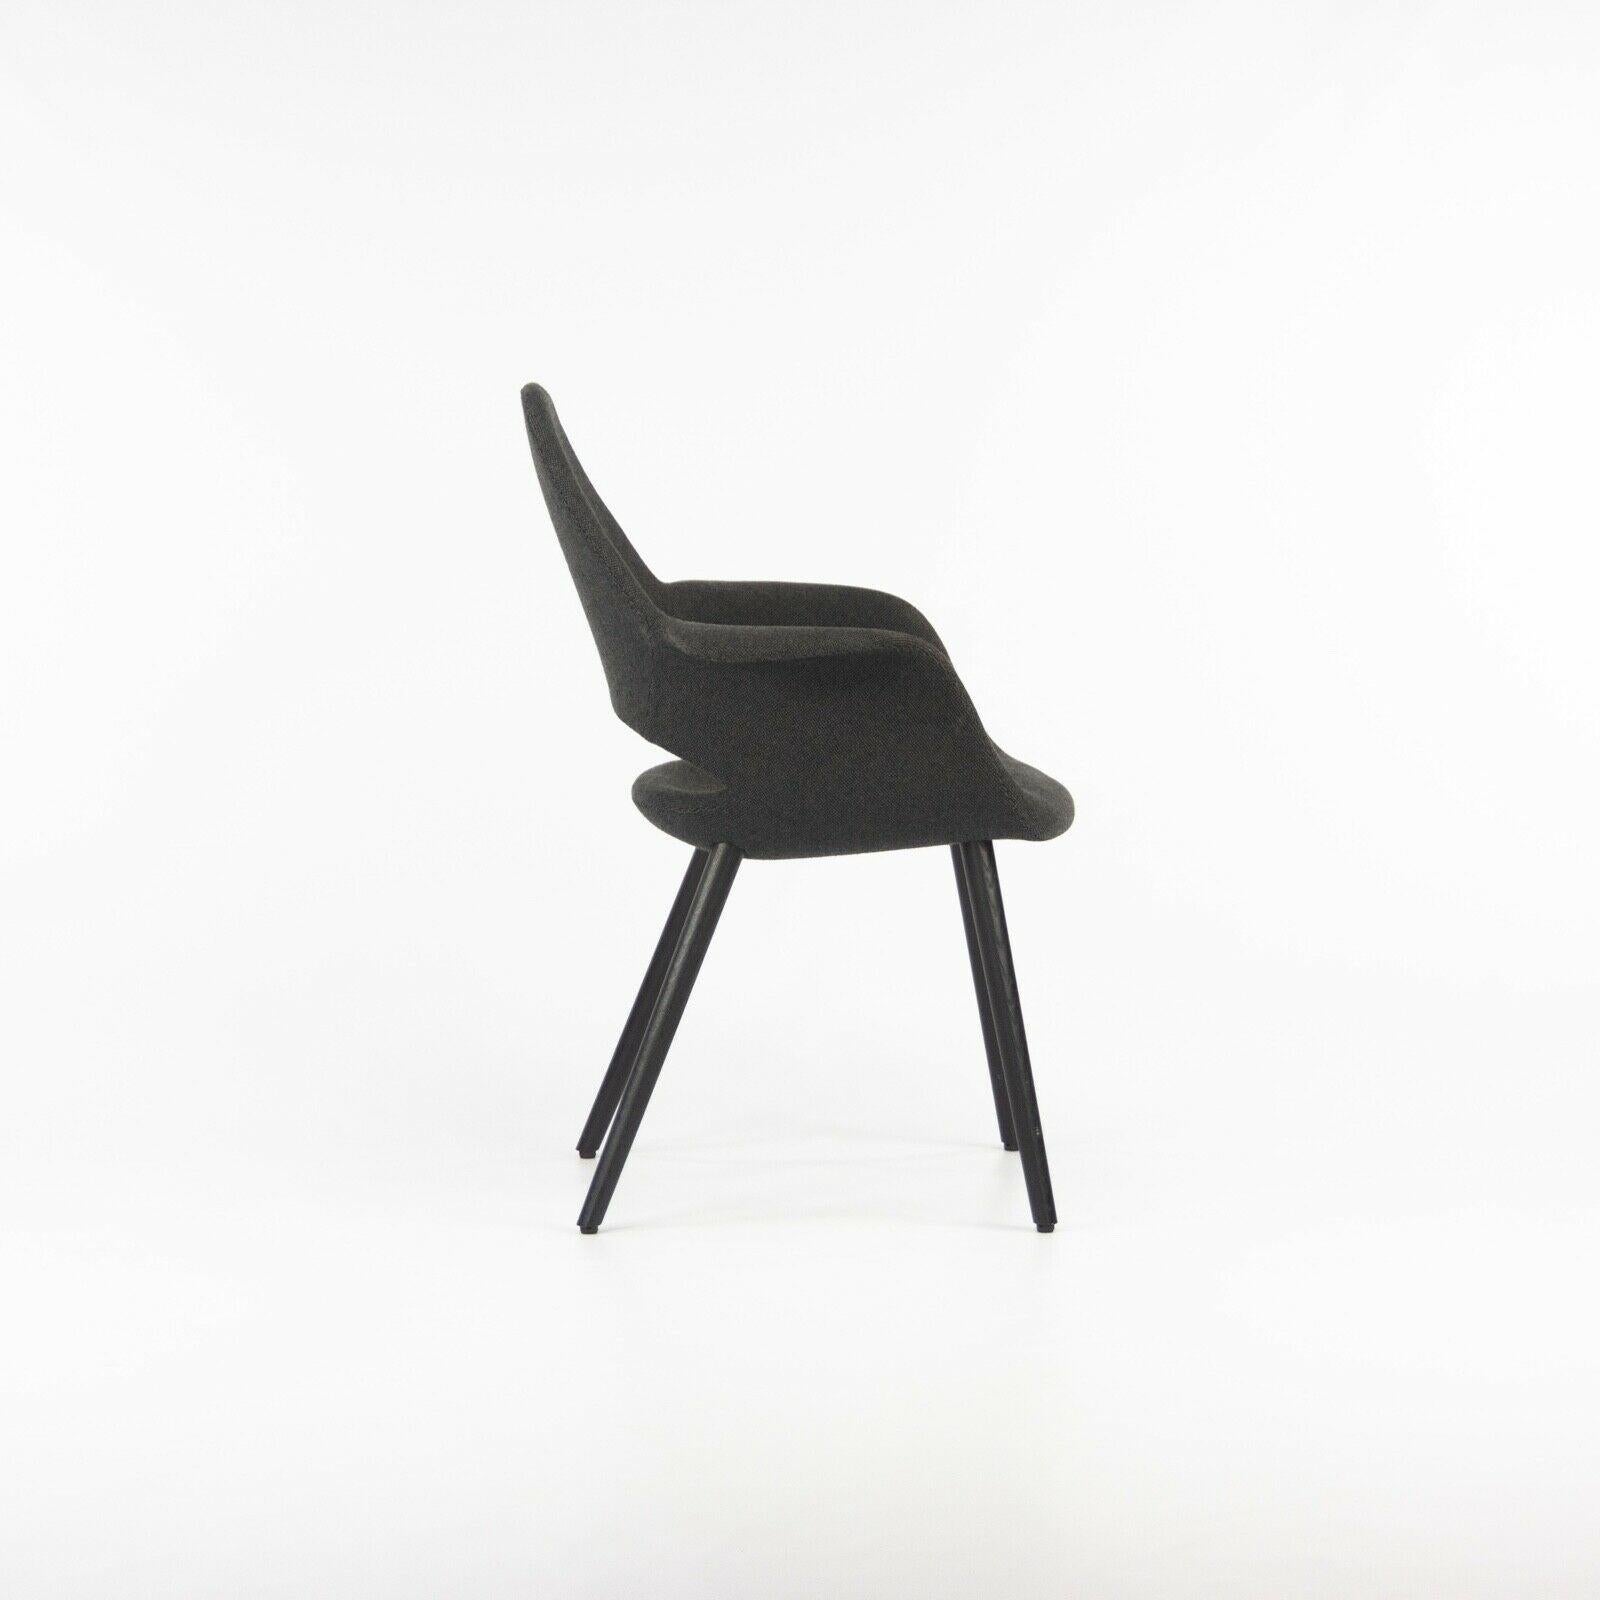 Swiss 2010s Charles Eames & Eero Saarinen Organic Chairs by Vitra in Dark Gray Fabric For Sale